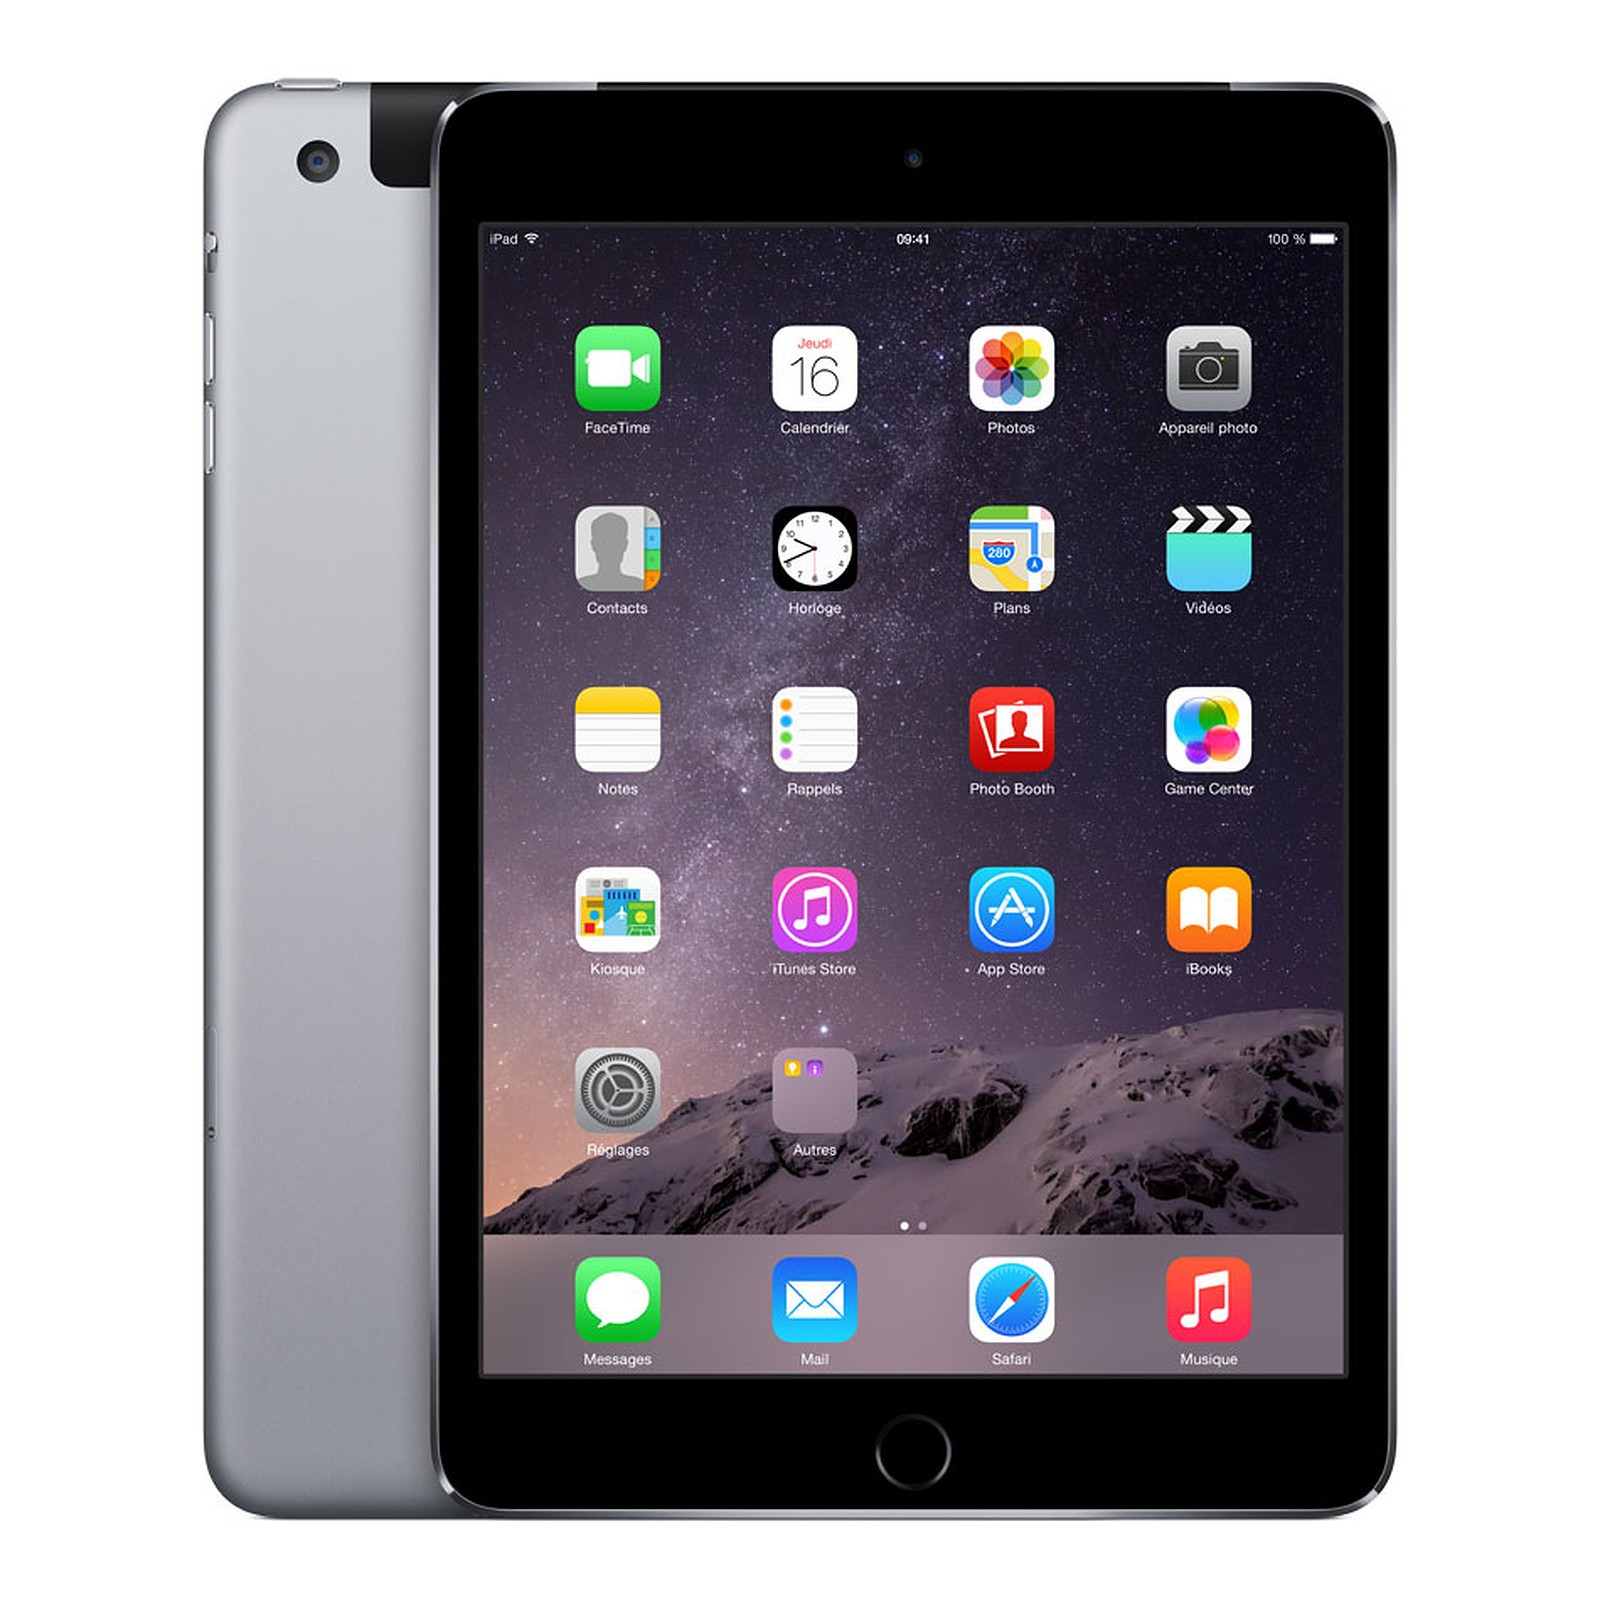 ORDI./TABLETTES: Apple iPad Mini Blanc 64 Go Wifi - D'occasion en Très Bon  Etat